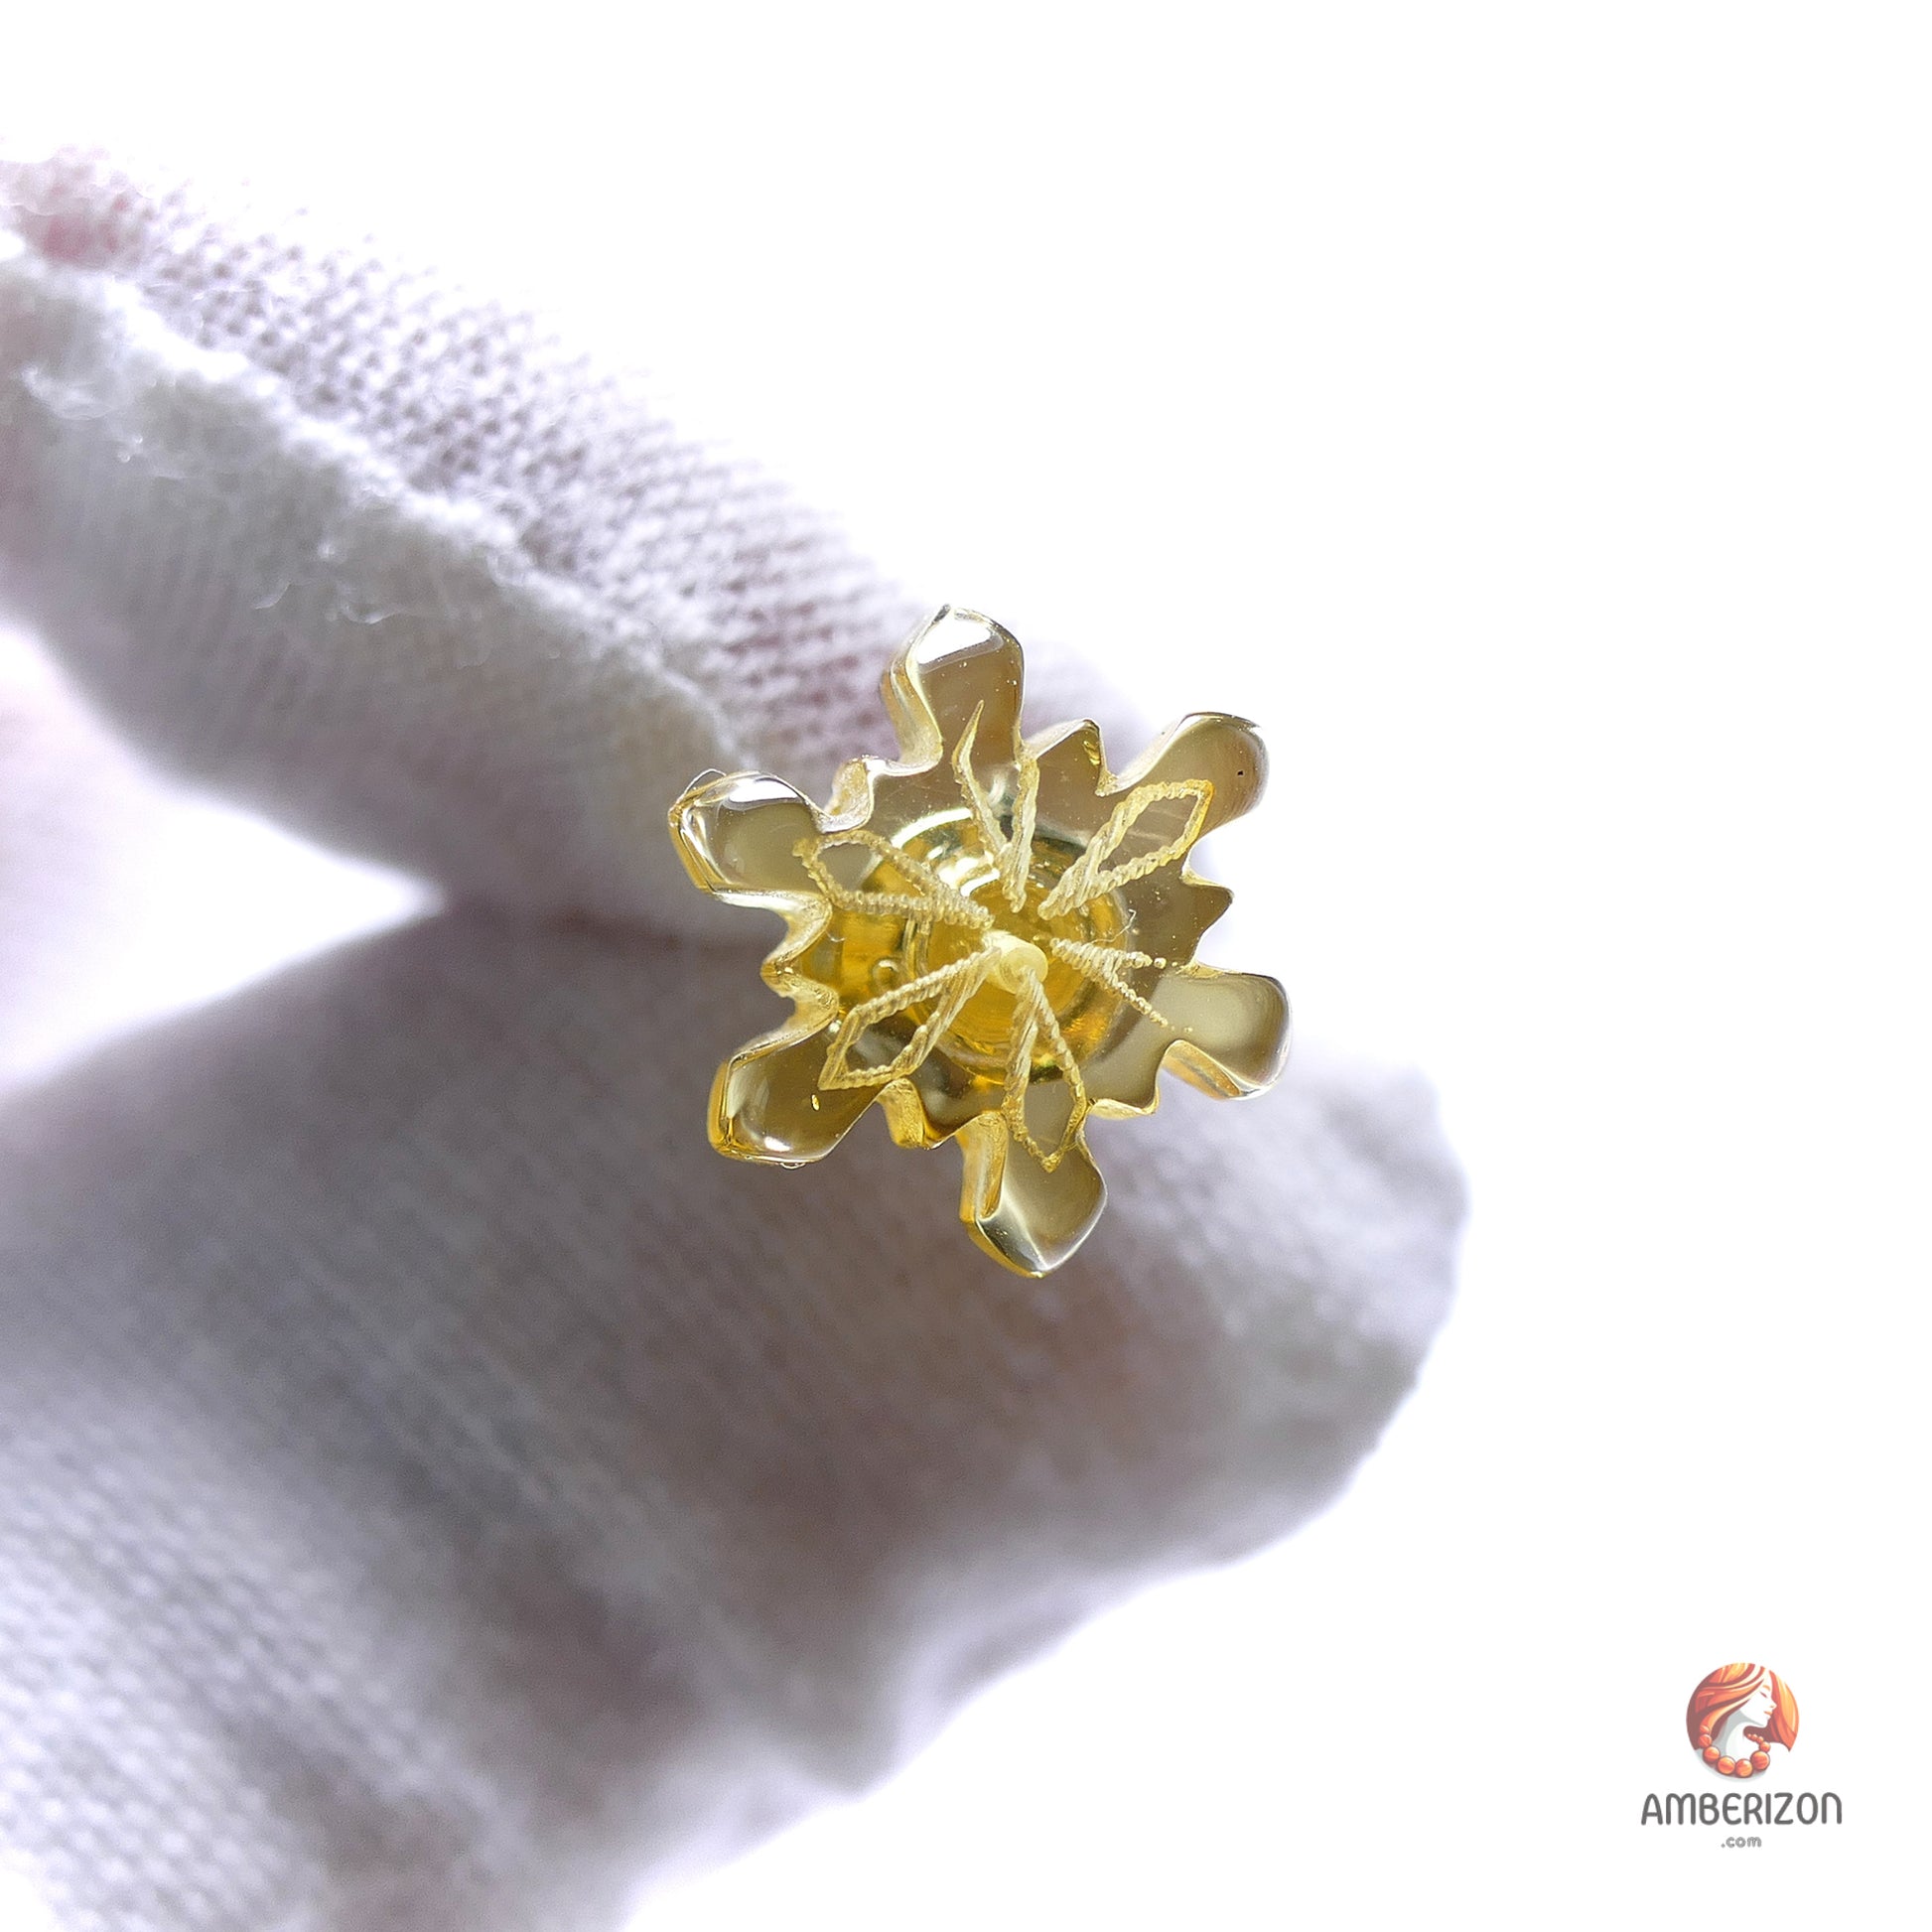 Baltic amber earrings - Snowflakes - Studs